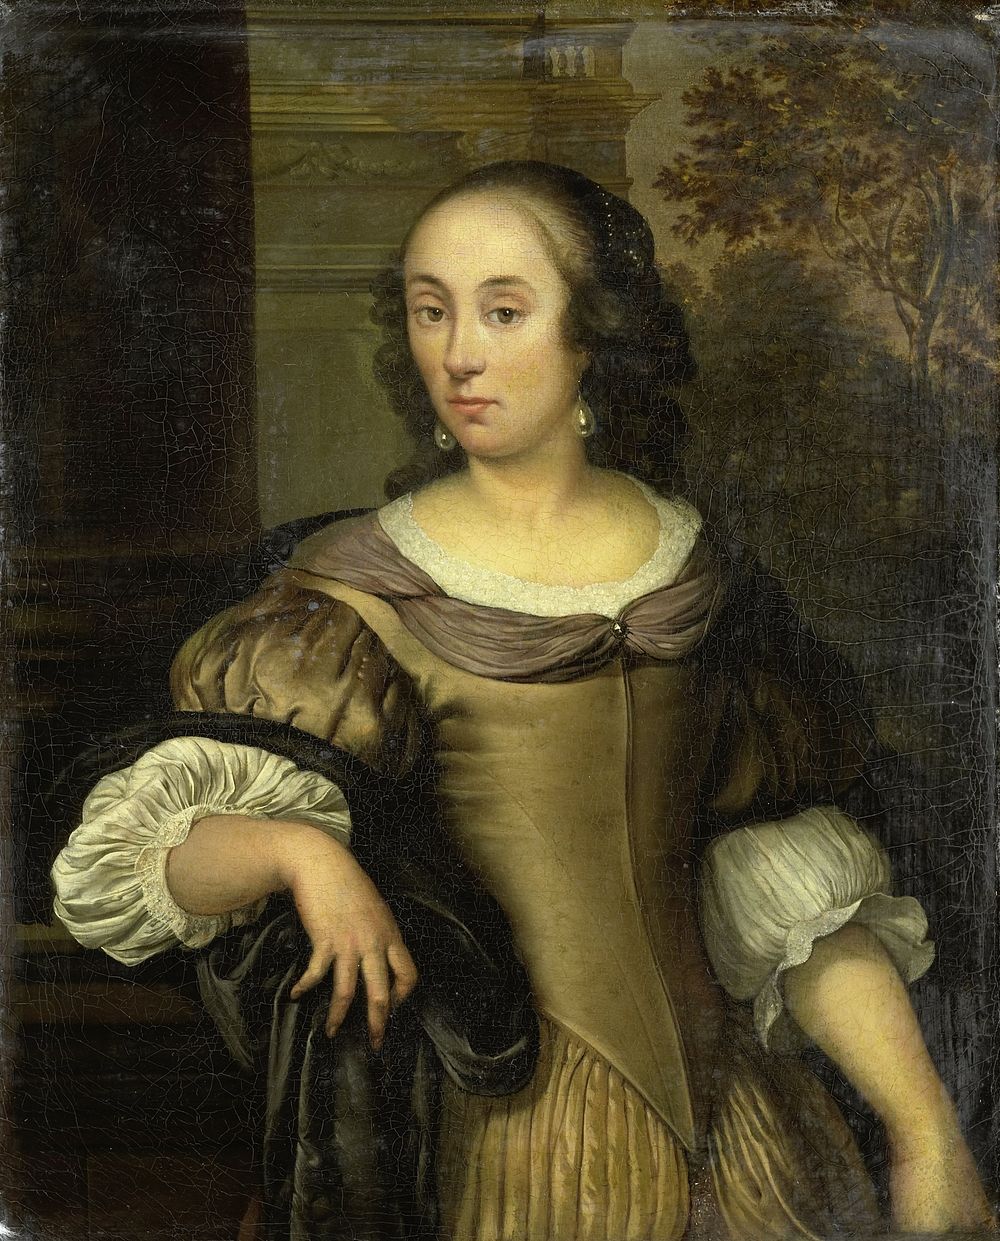 Portrait of a young woman (c. 1650 - c. 1670) by Eglon van der Neer